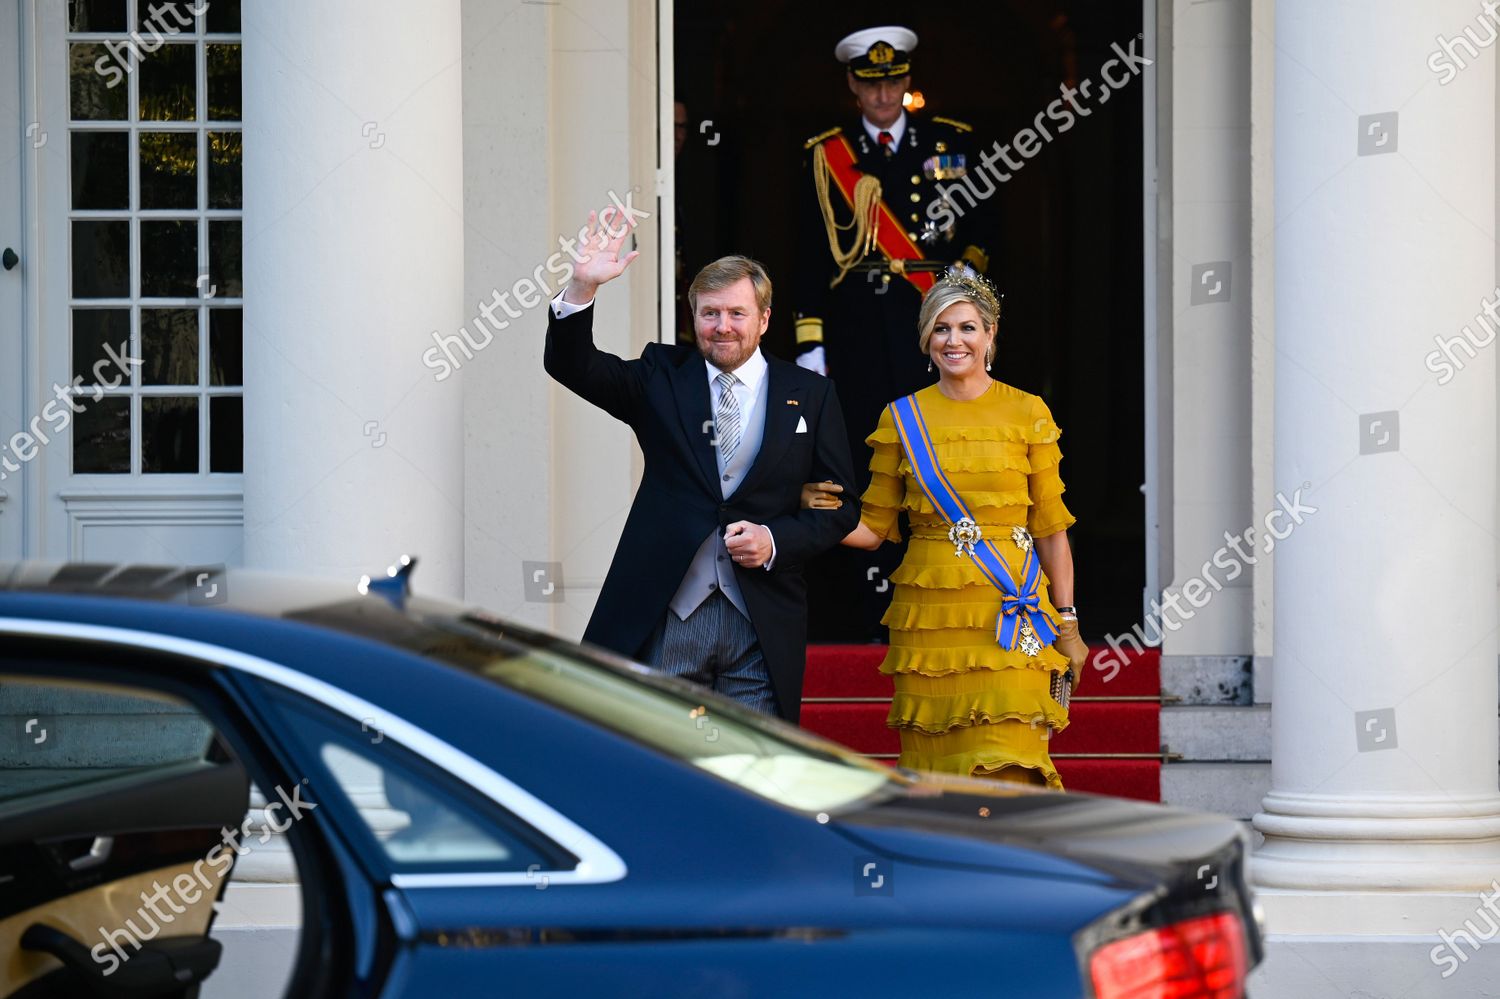 prinsjesdag-ceremony-the-hague-the-netherlands-shutterstock-editorial-10777335a.jpg